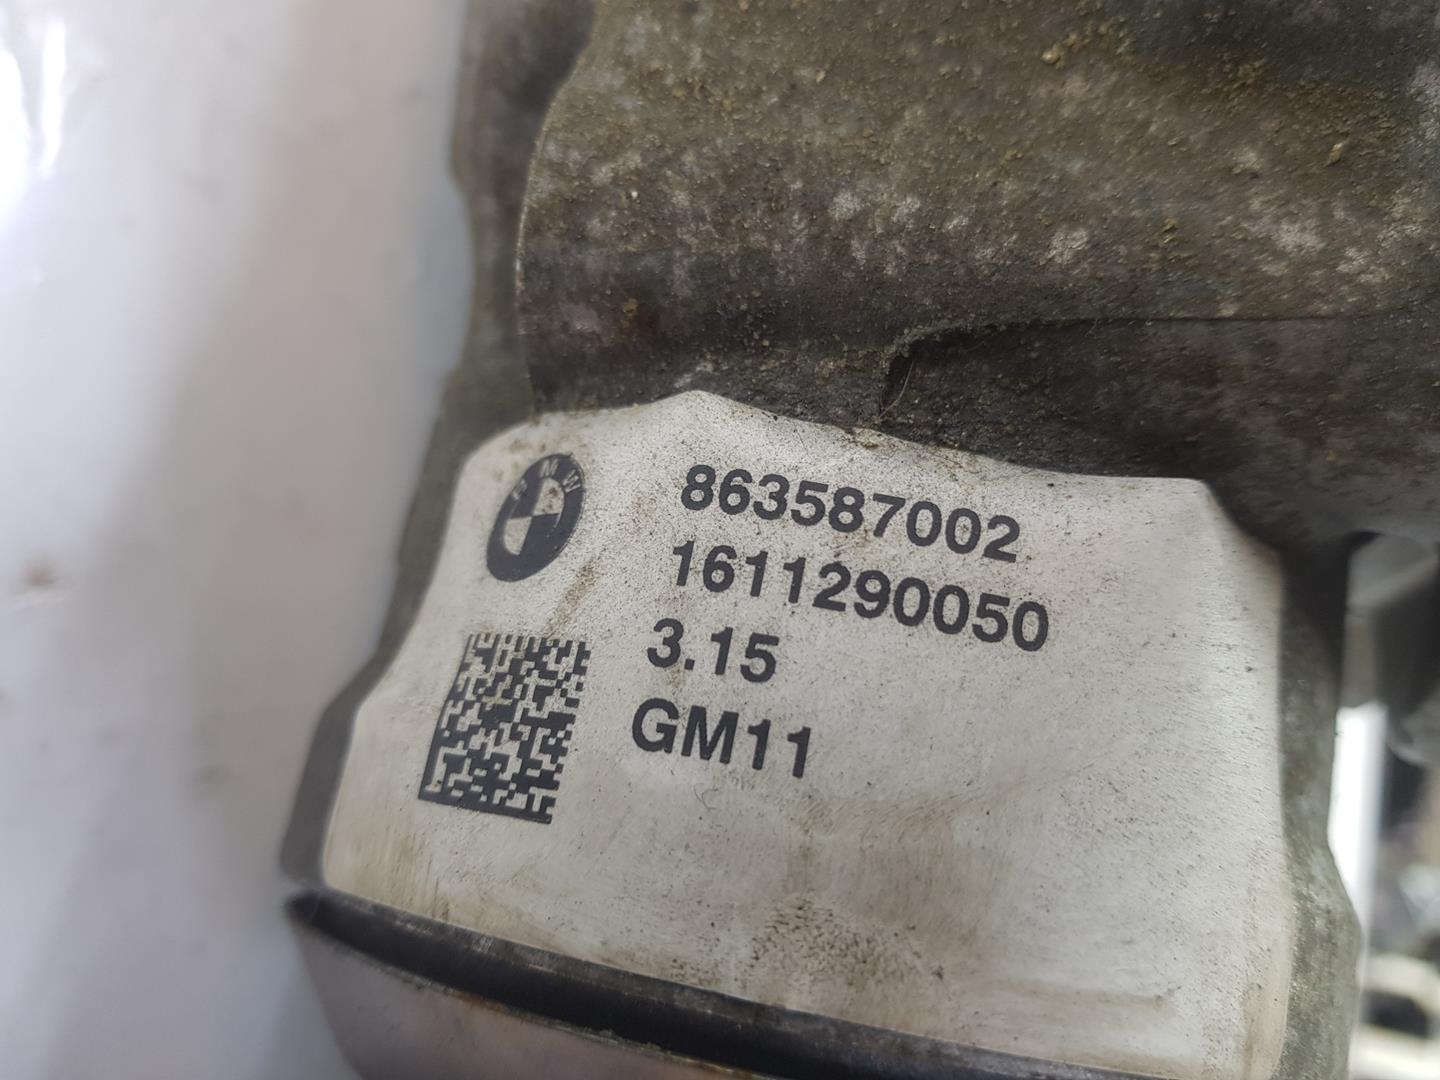 BMW X5 M F85 (2014-2018) Front Transfer Case 8635870, RELACION3.15, 1212CD 25061335